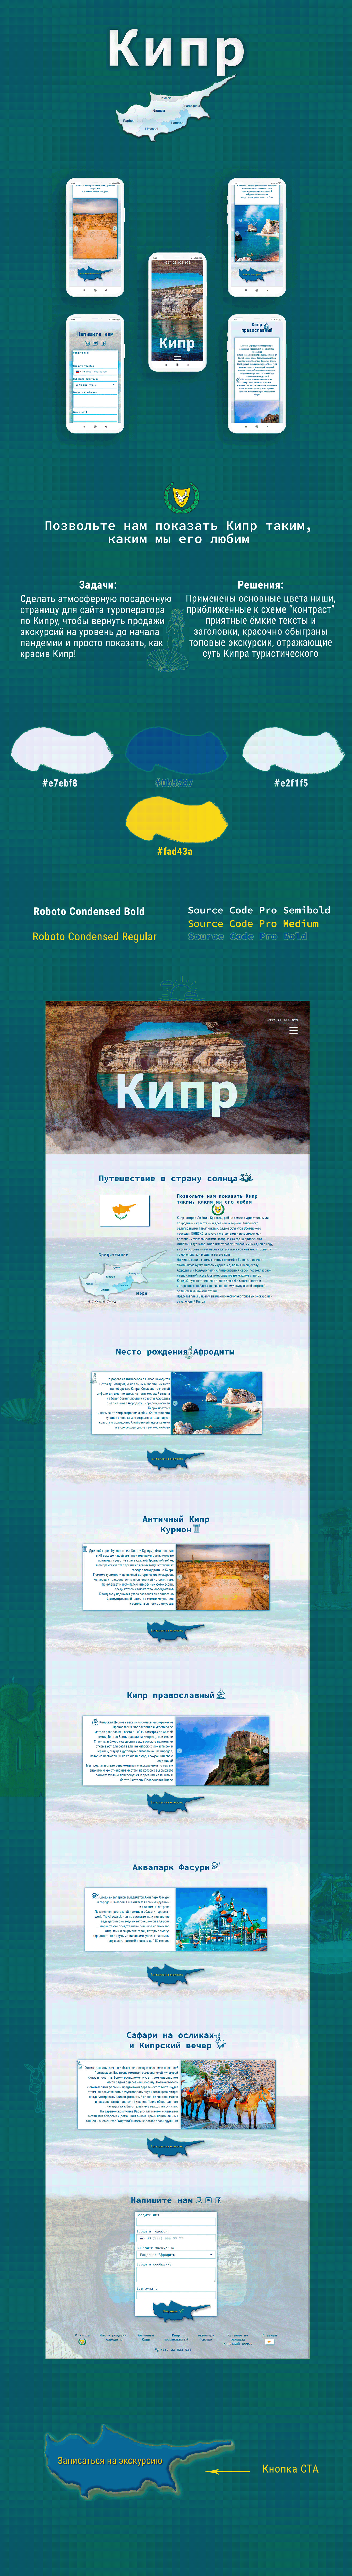 cyprus landing page tourism ux/ui design Webdesign Website кипр лендинг сайт туризм